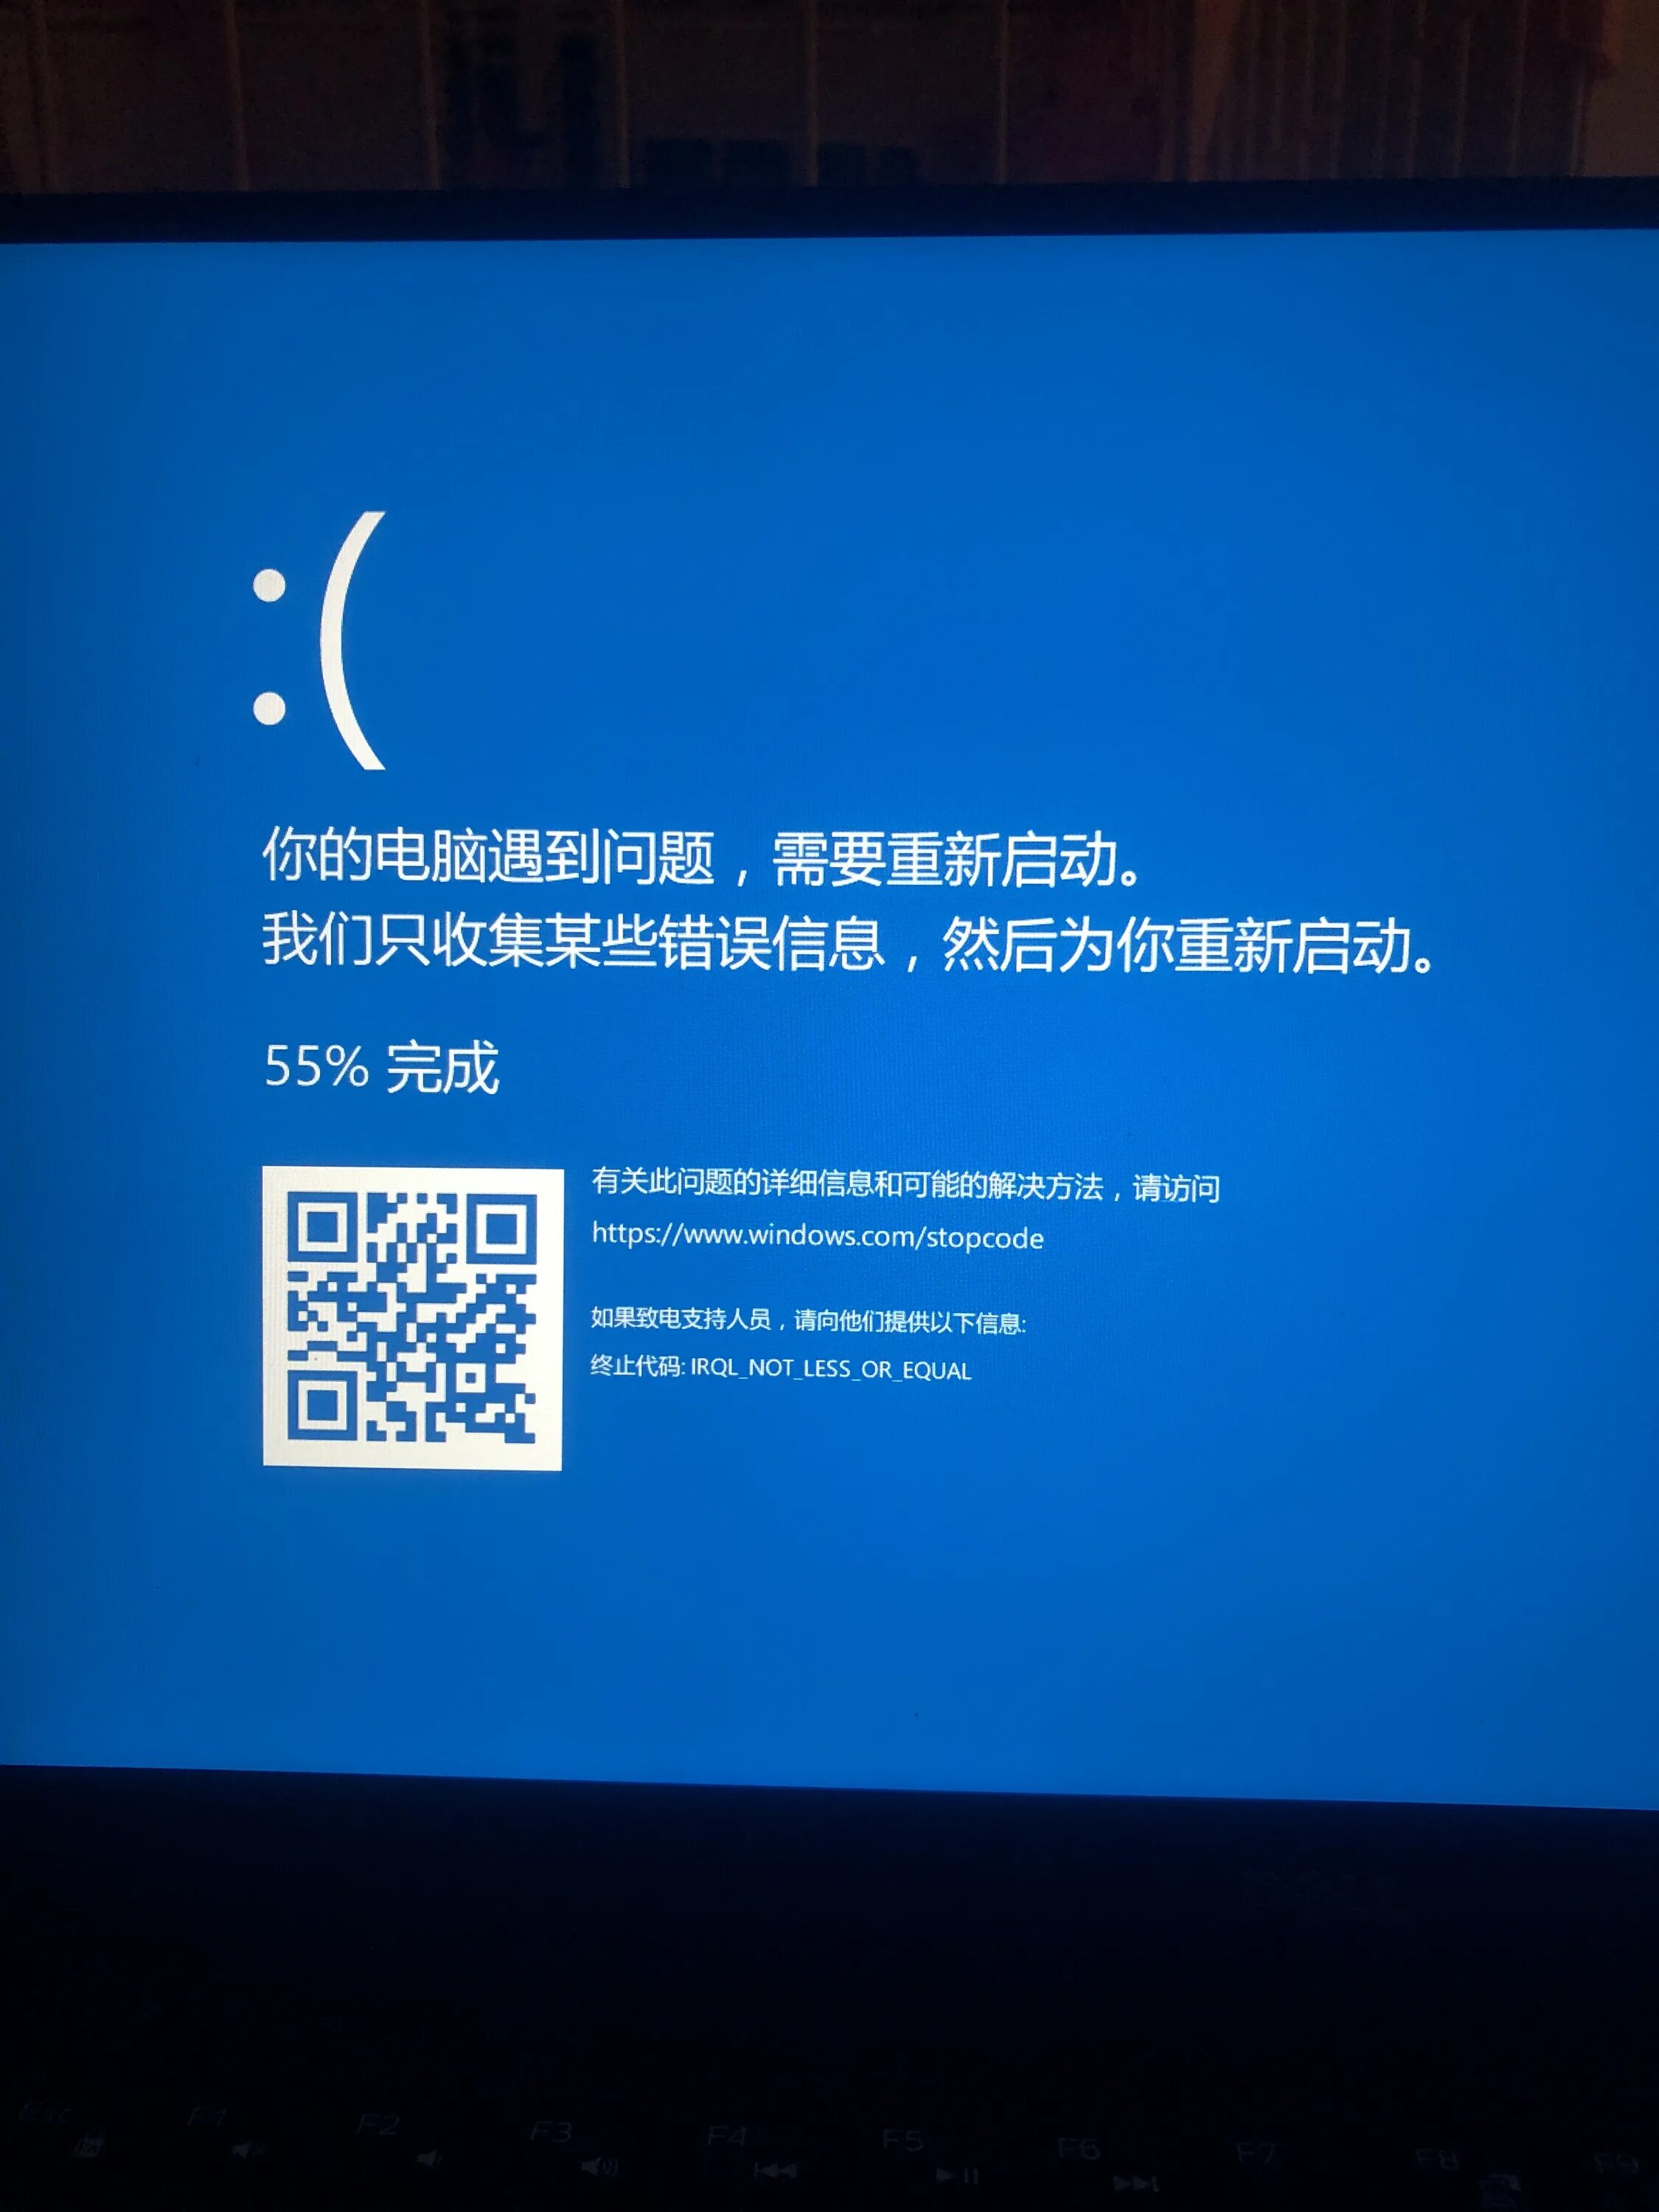 Синий экран stopcode. Windows.com stopcode. Стопкоде виндовс 10. Windows stopcode QR code.